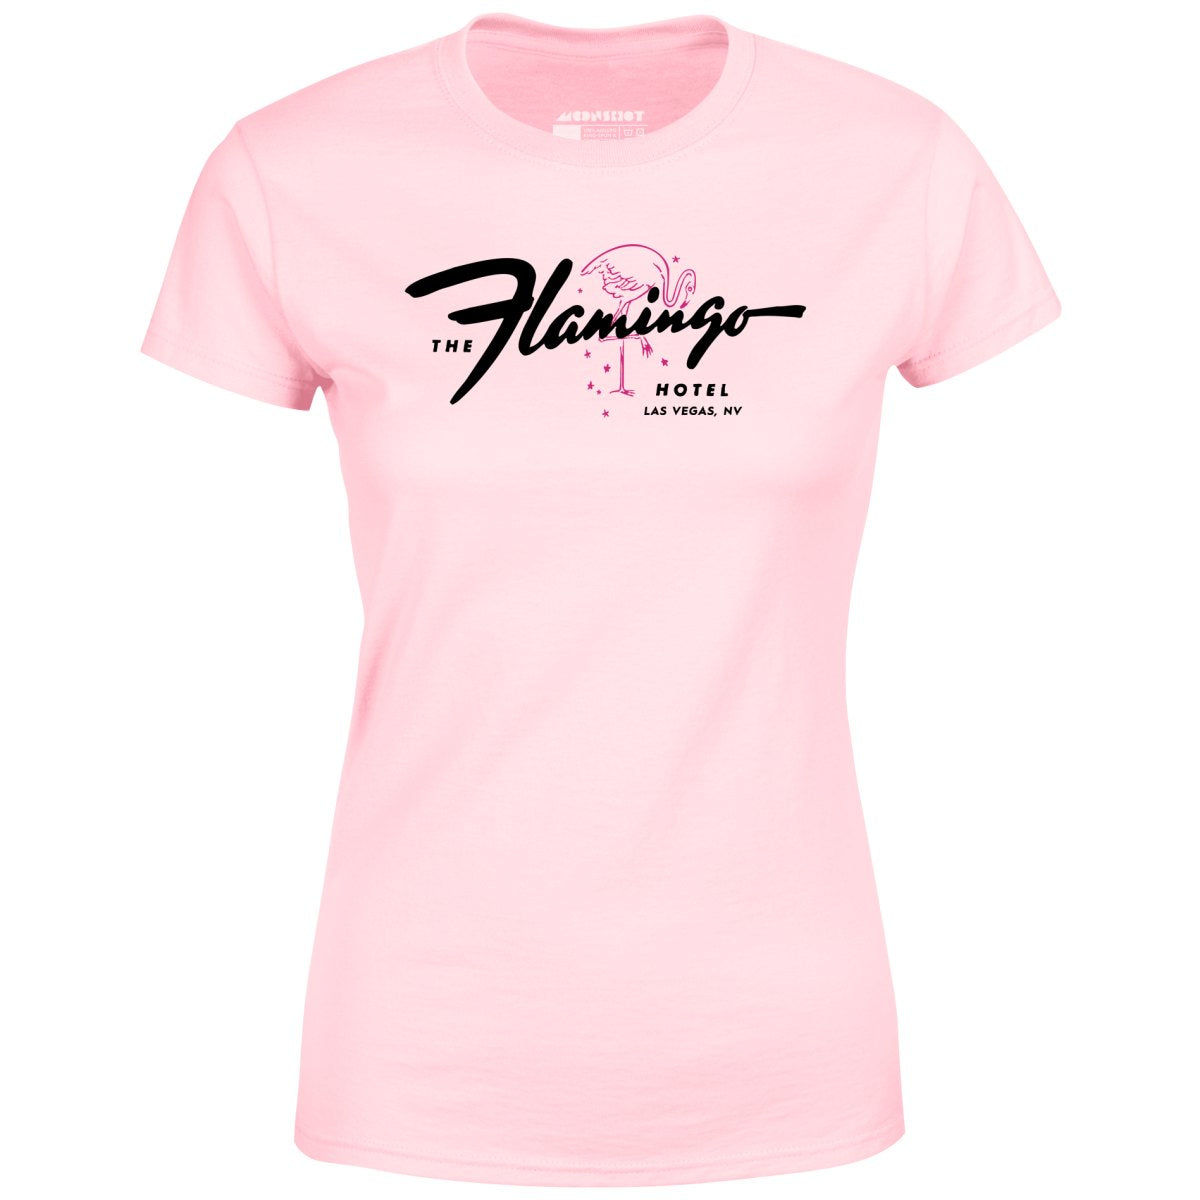 The Flamingo Hotel - Vintage Las Vegas - Women's T-Shirt